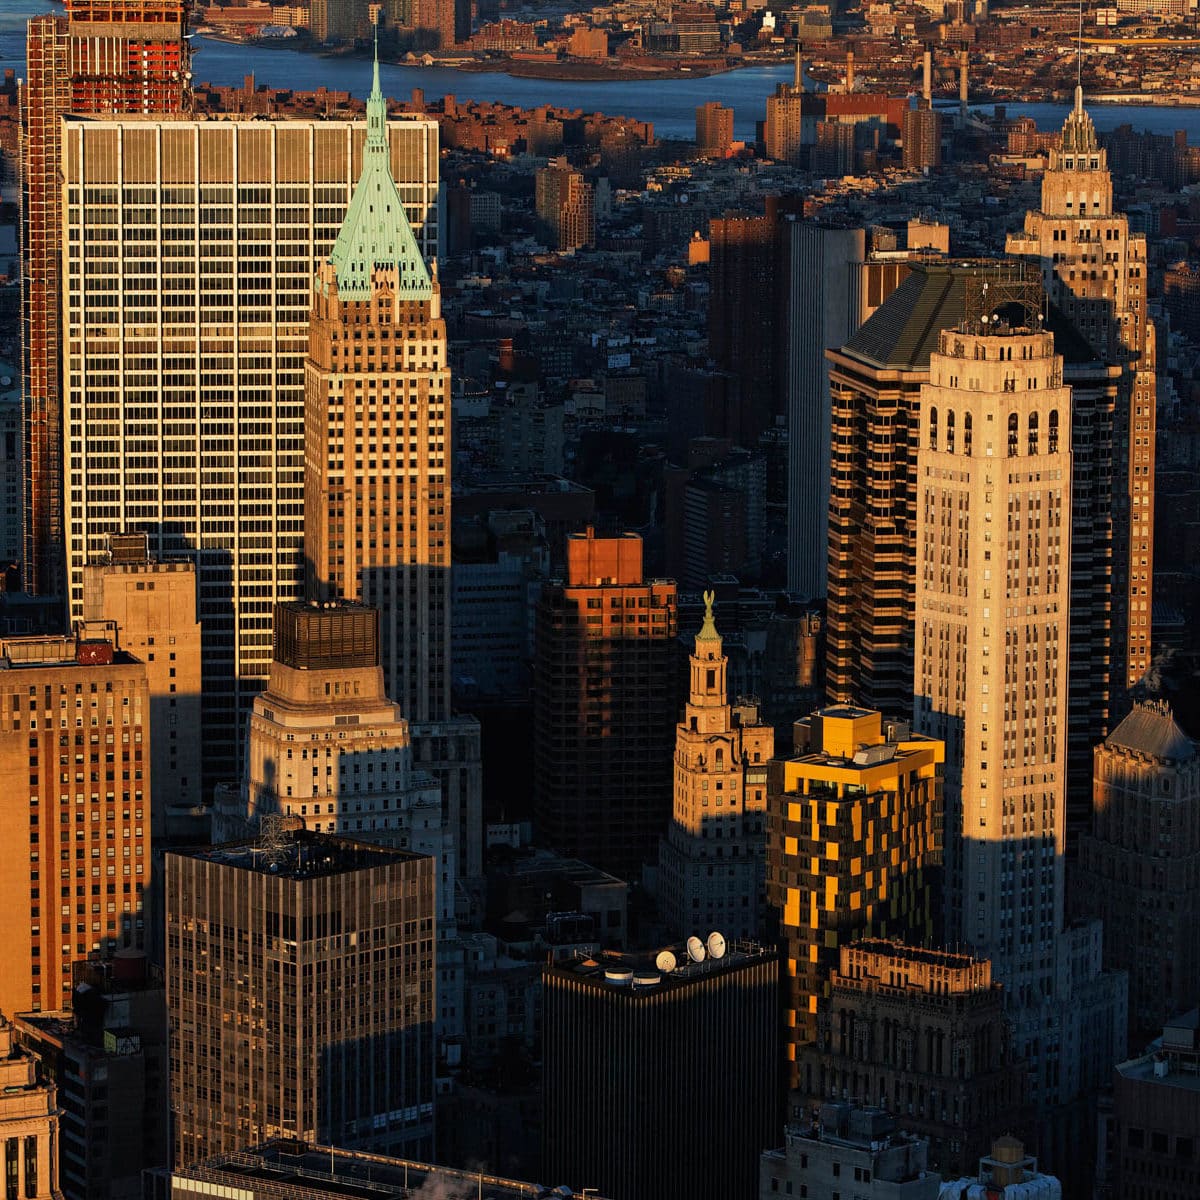 Financial District, Manhattan, New York, United States (40°42'16.36" N, 74° 0'45.37" W).